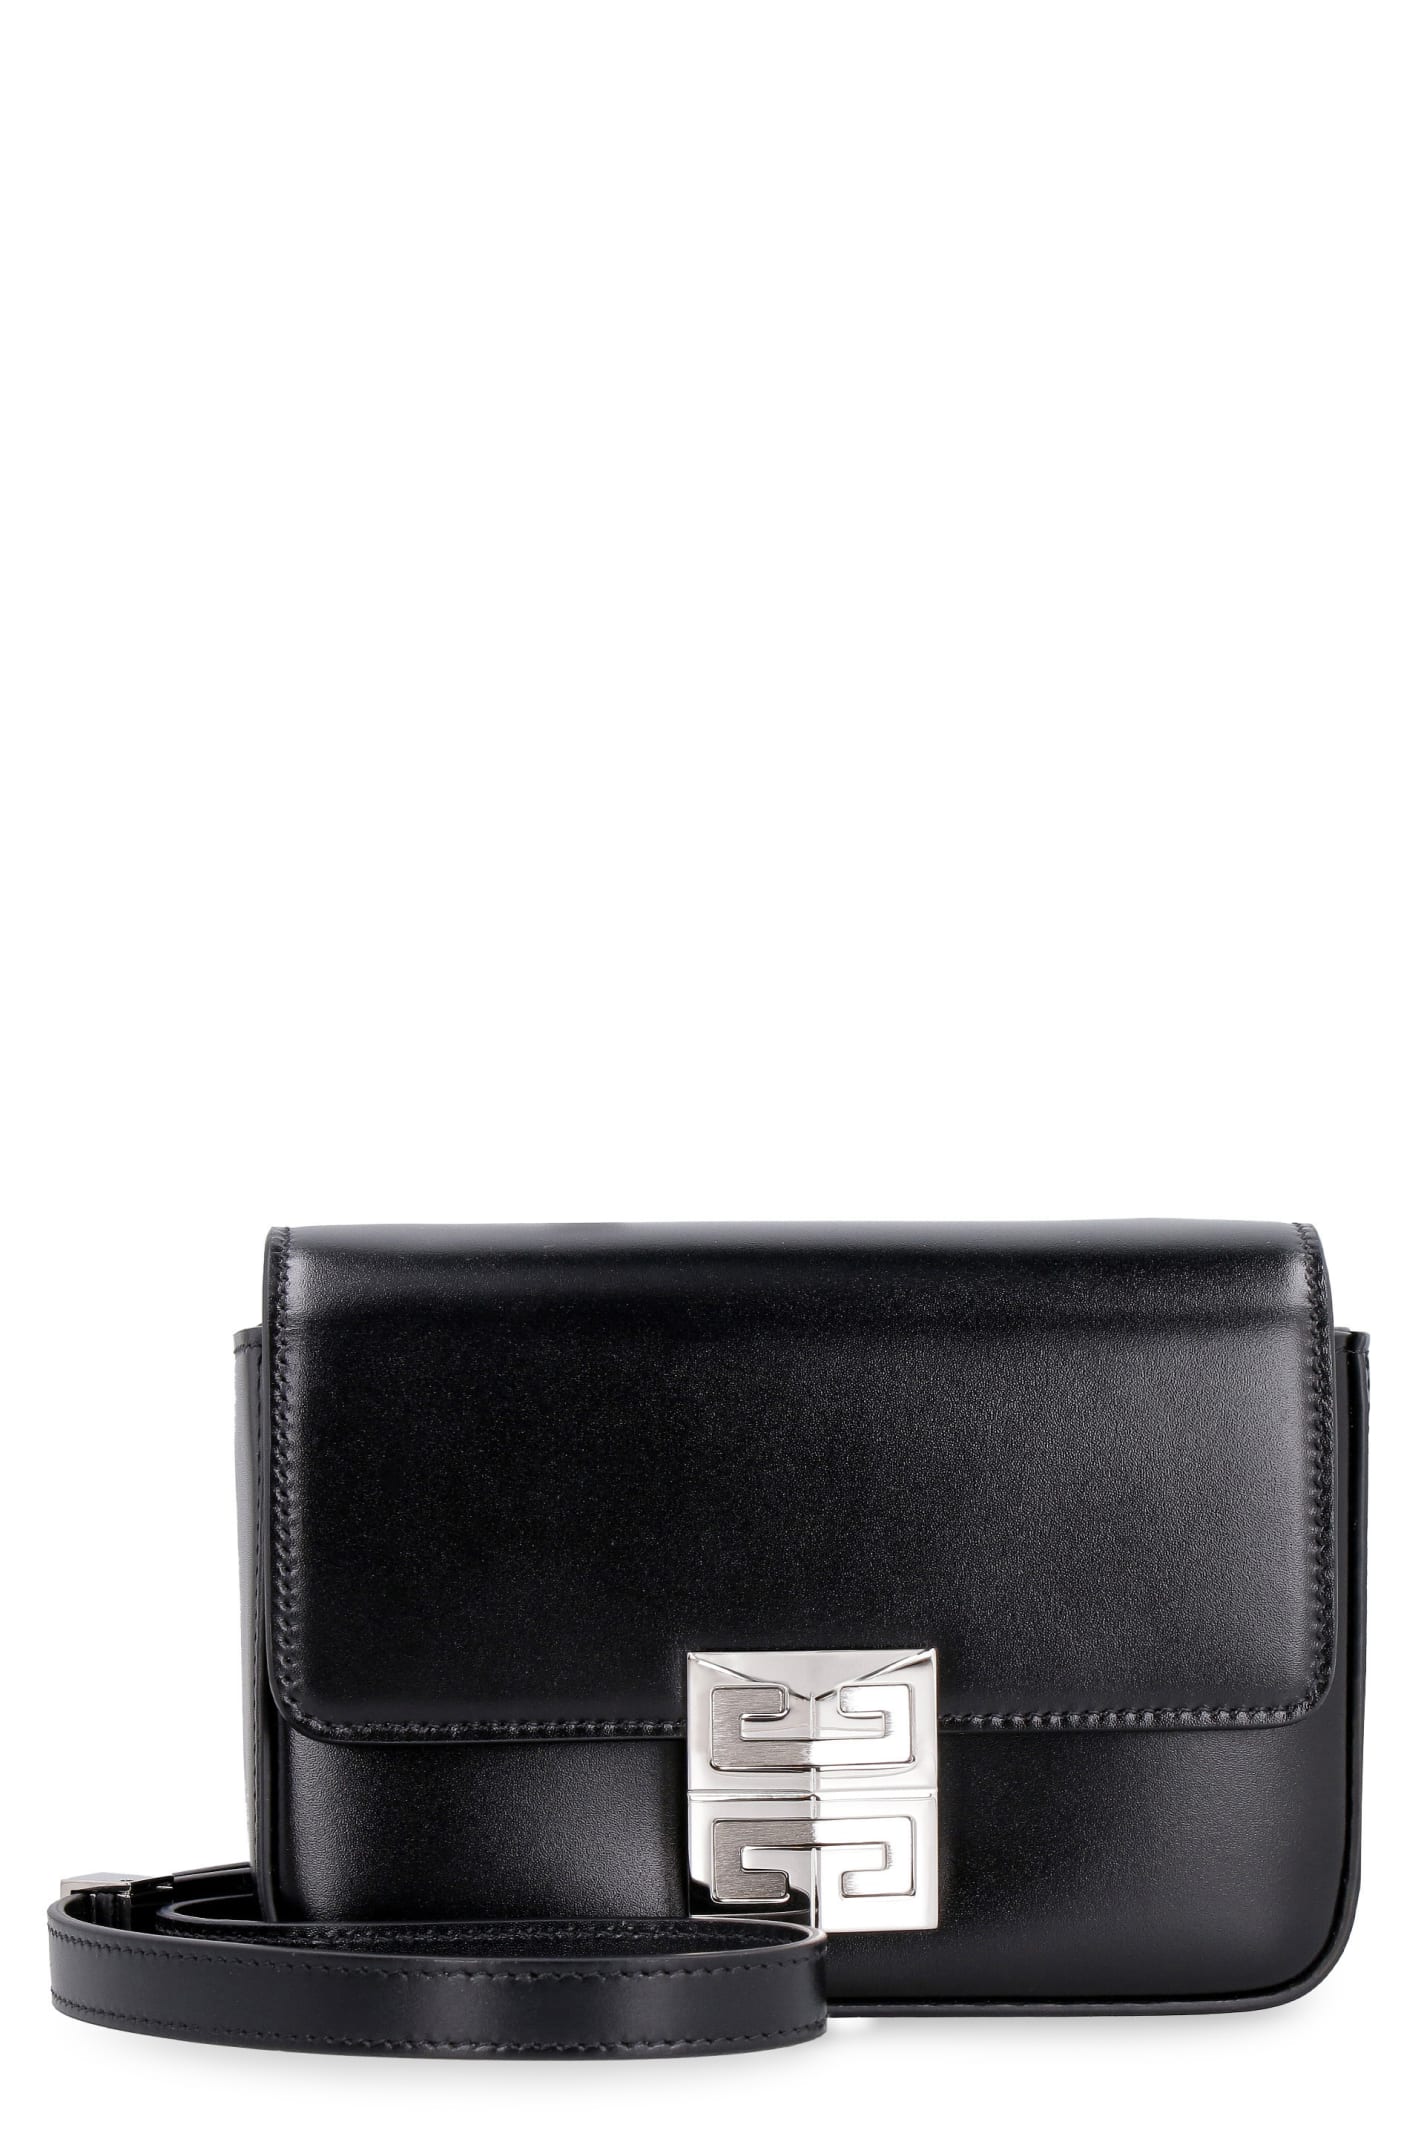 Givenchy 4g Leather Crossbody Bag